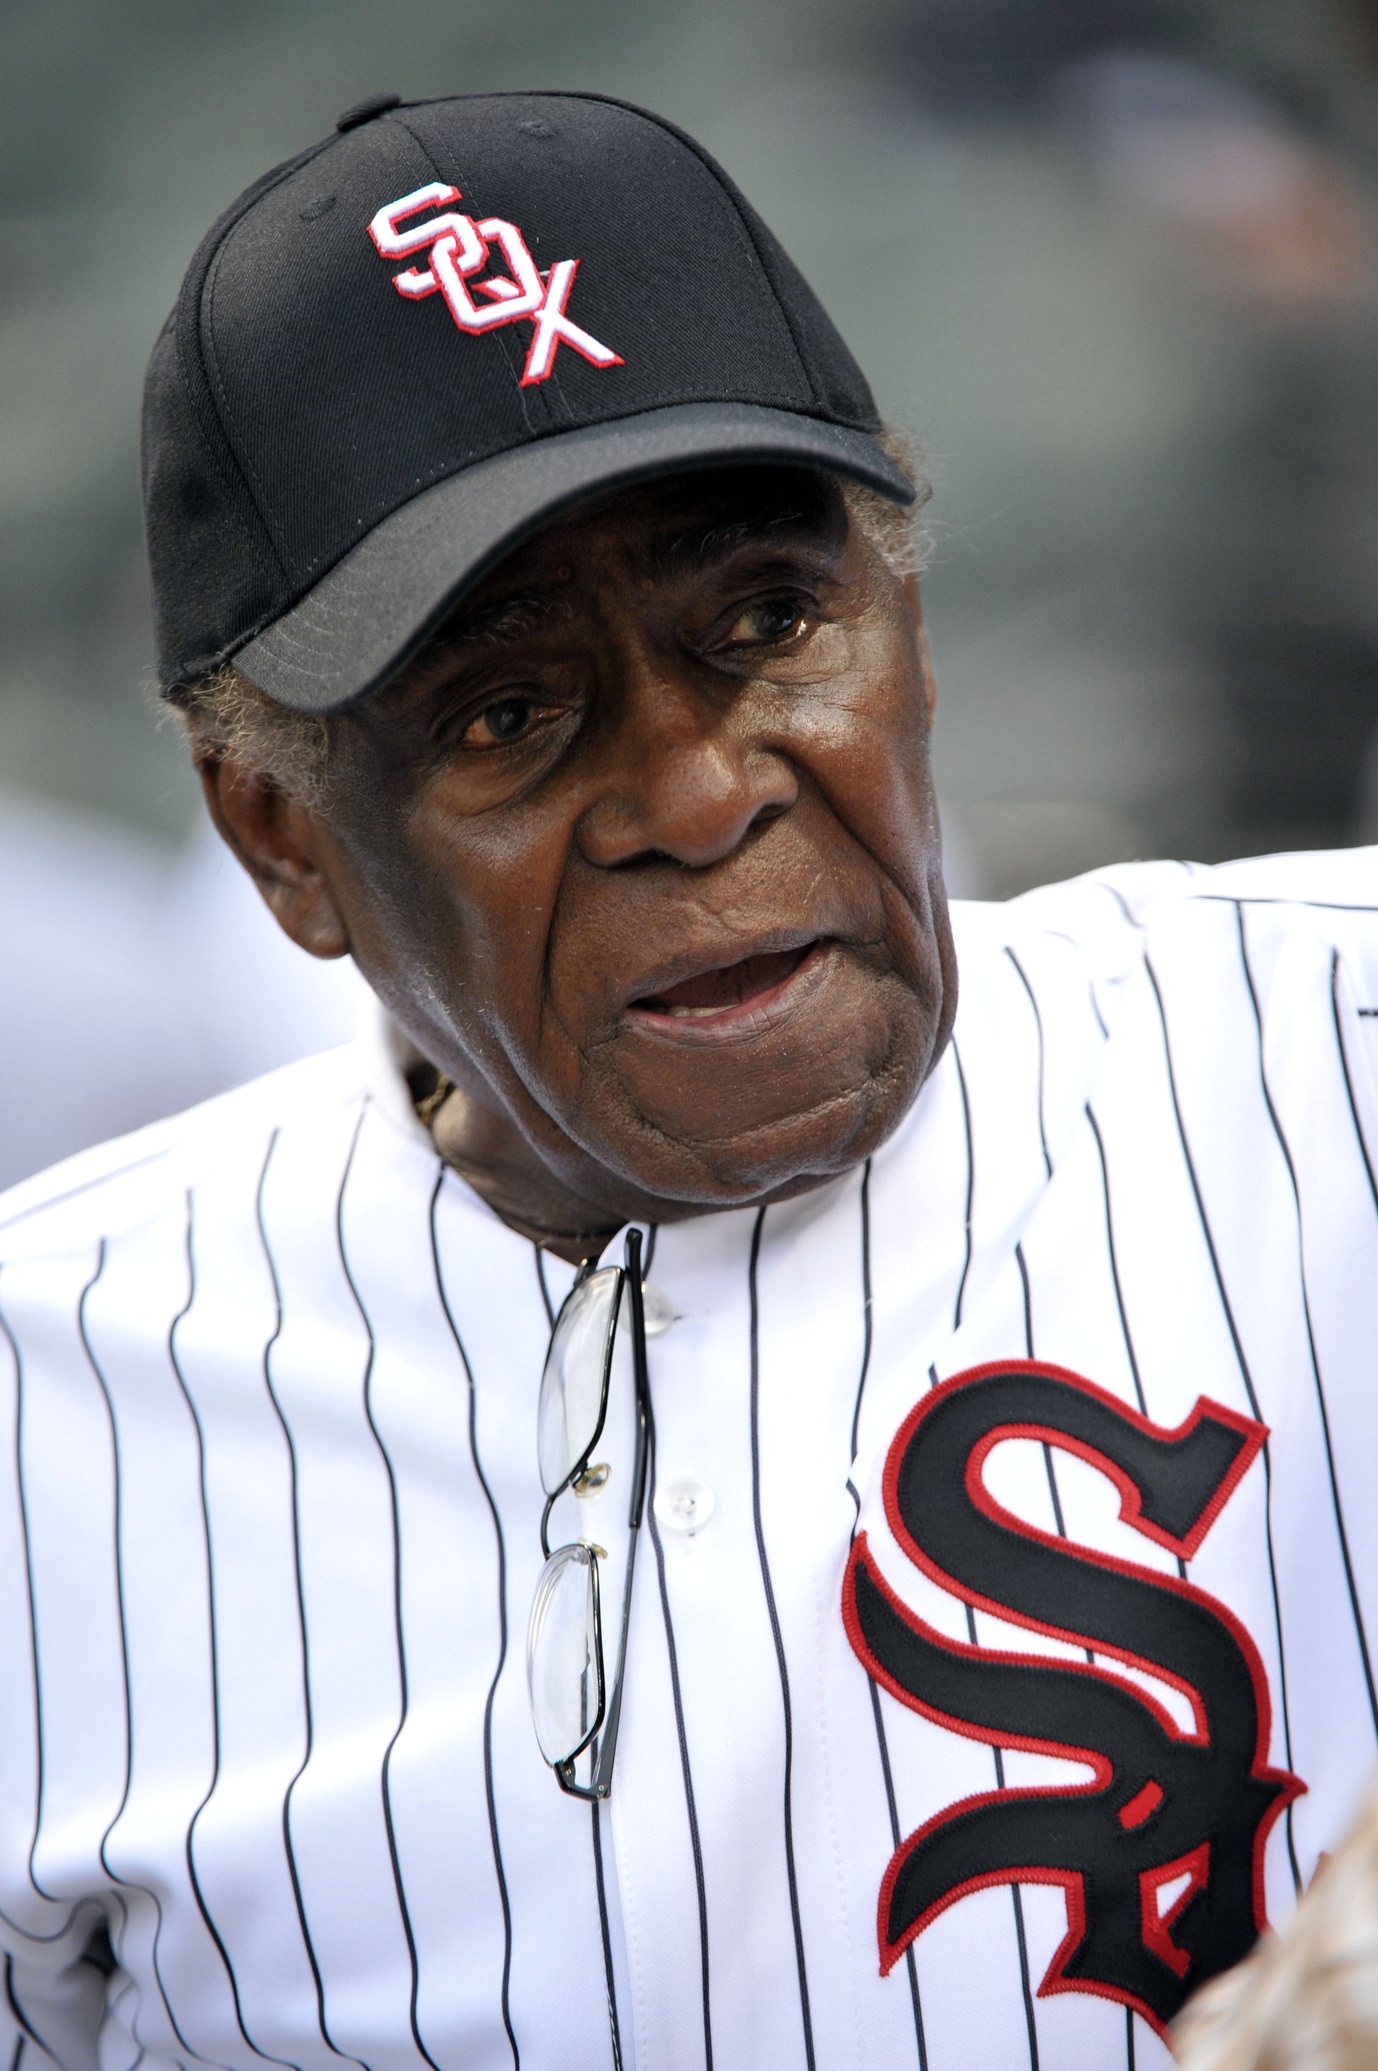 Chicago's 1st black major league baseball player Minoso dies